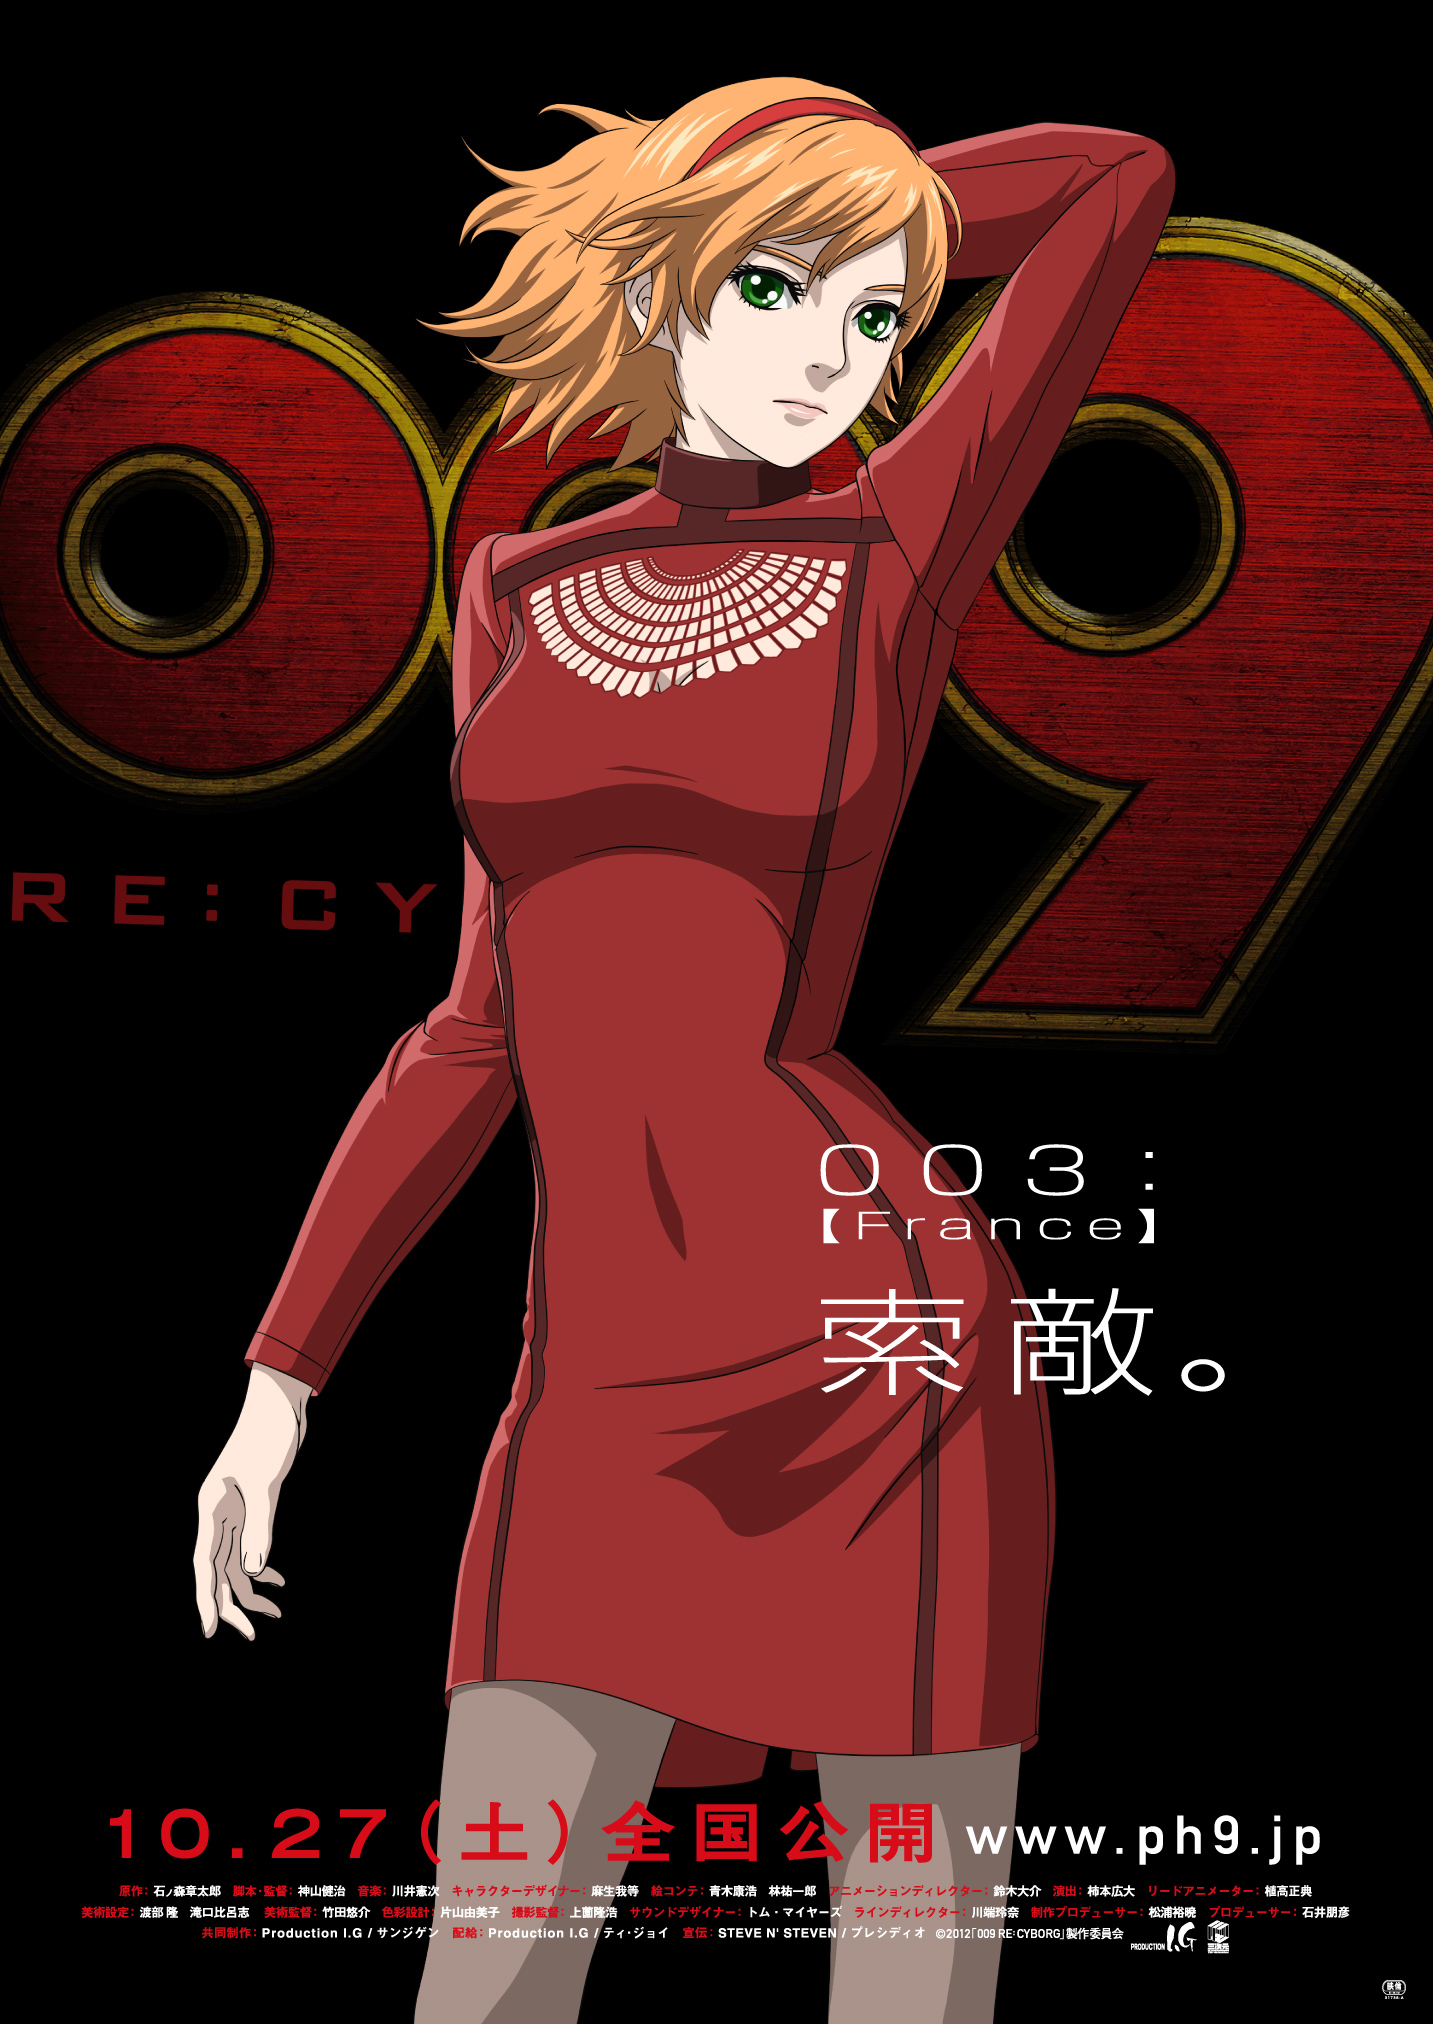 download 009 re cyborg manga